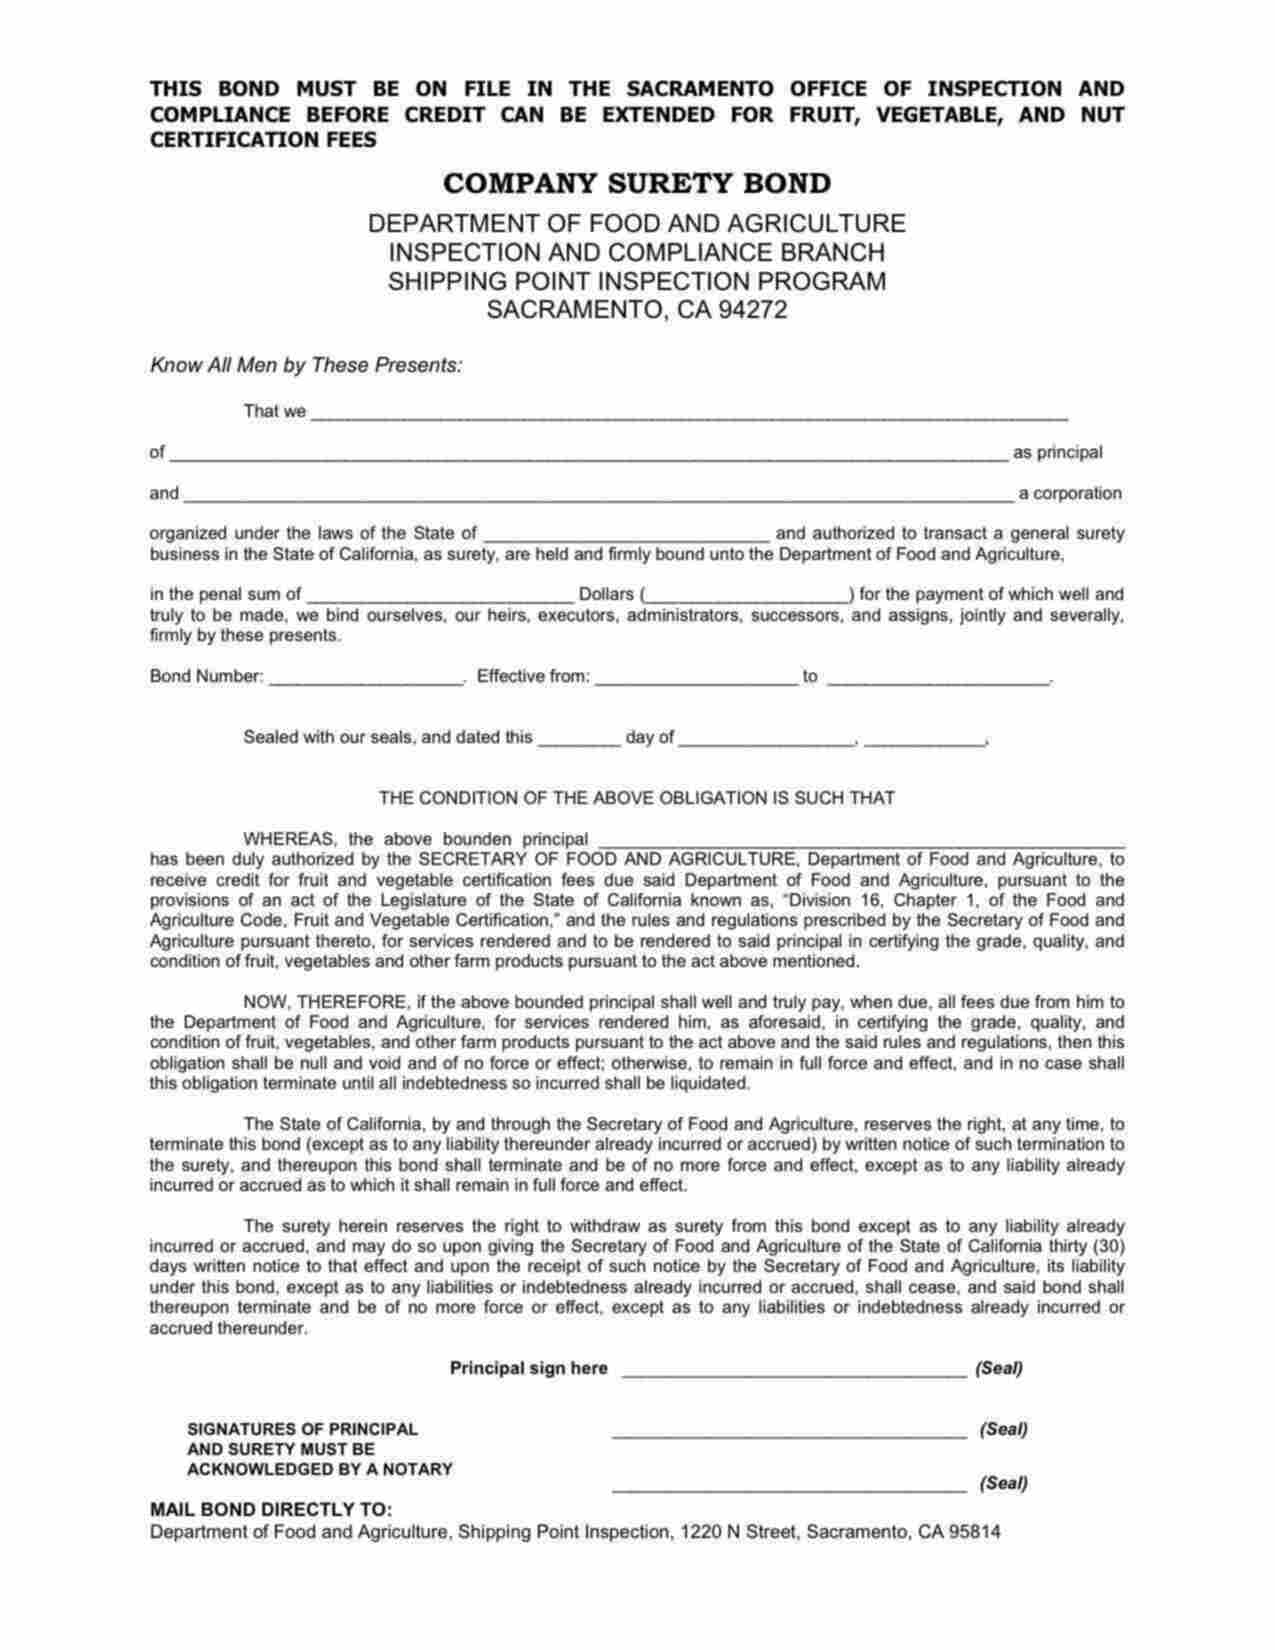 California Shipping Point Inspection Program Bond Form